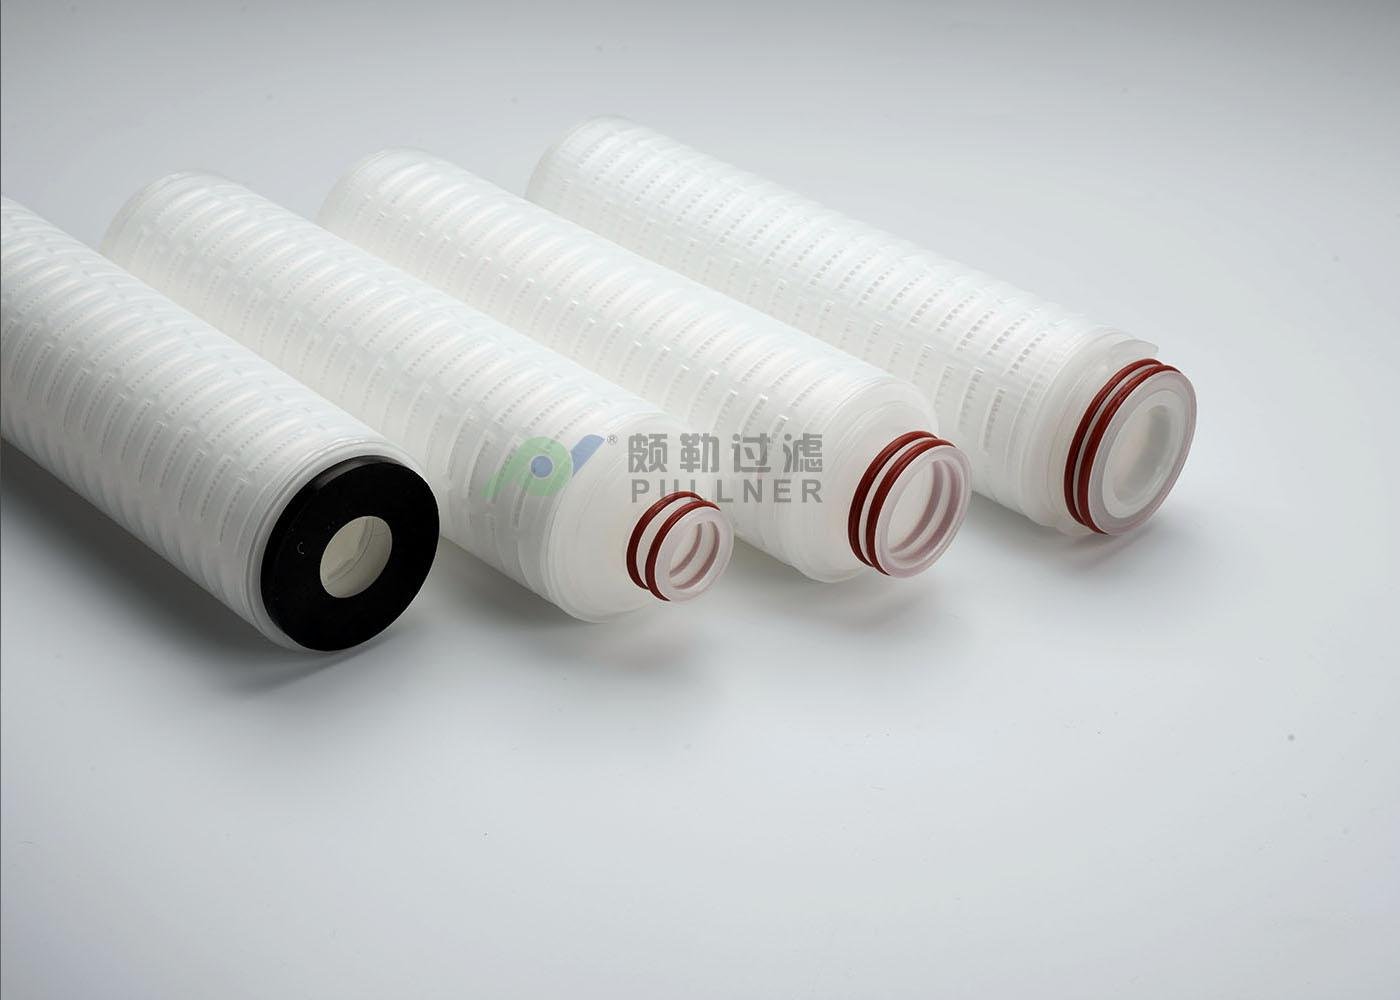 PLGF Liquid Filtration Glass Fiber Membrane Filter Cartridge